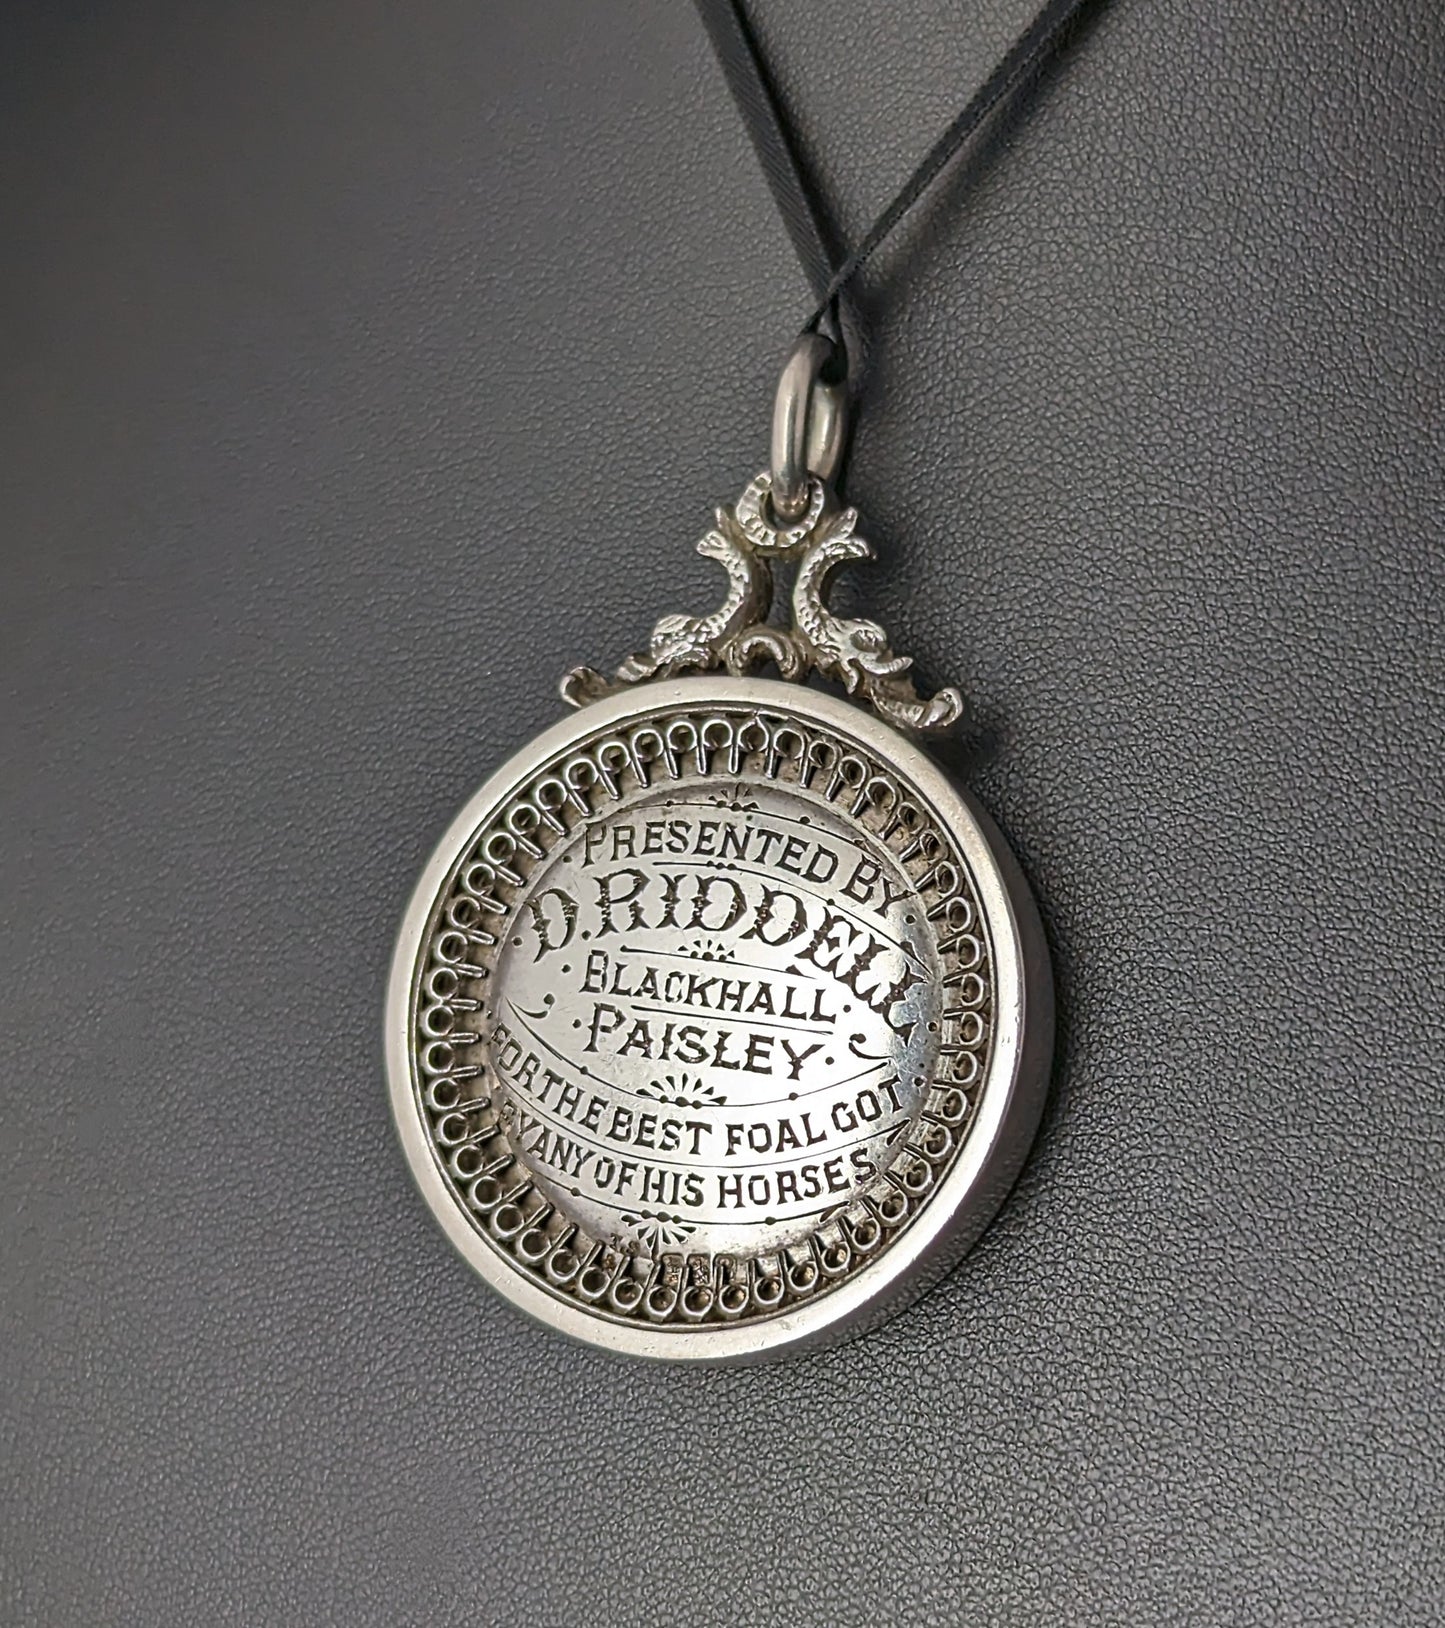 Antique Victorian silver medal pendant, Medallion, Agriculture